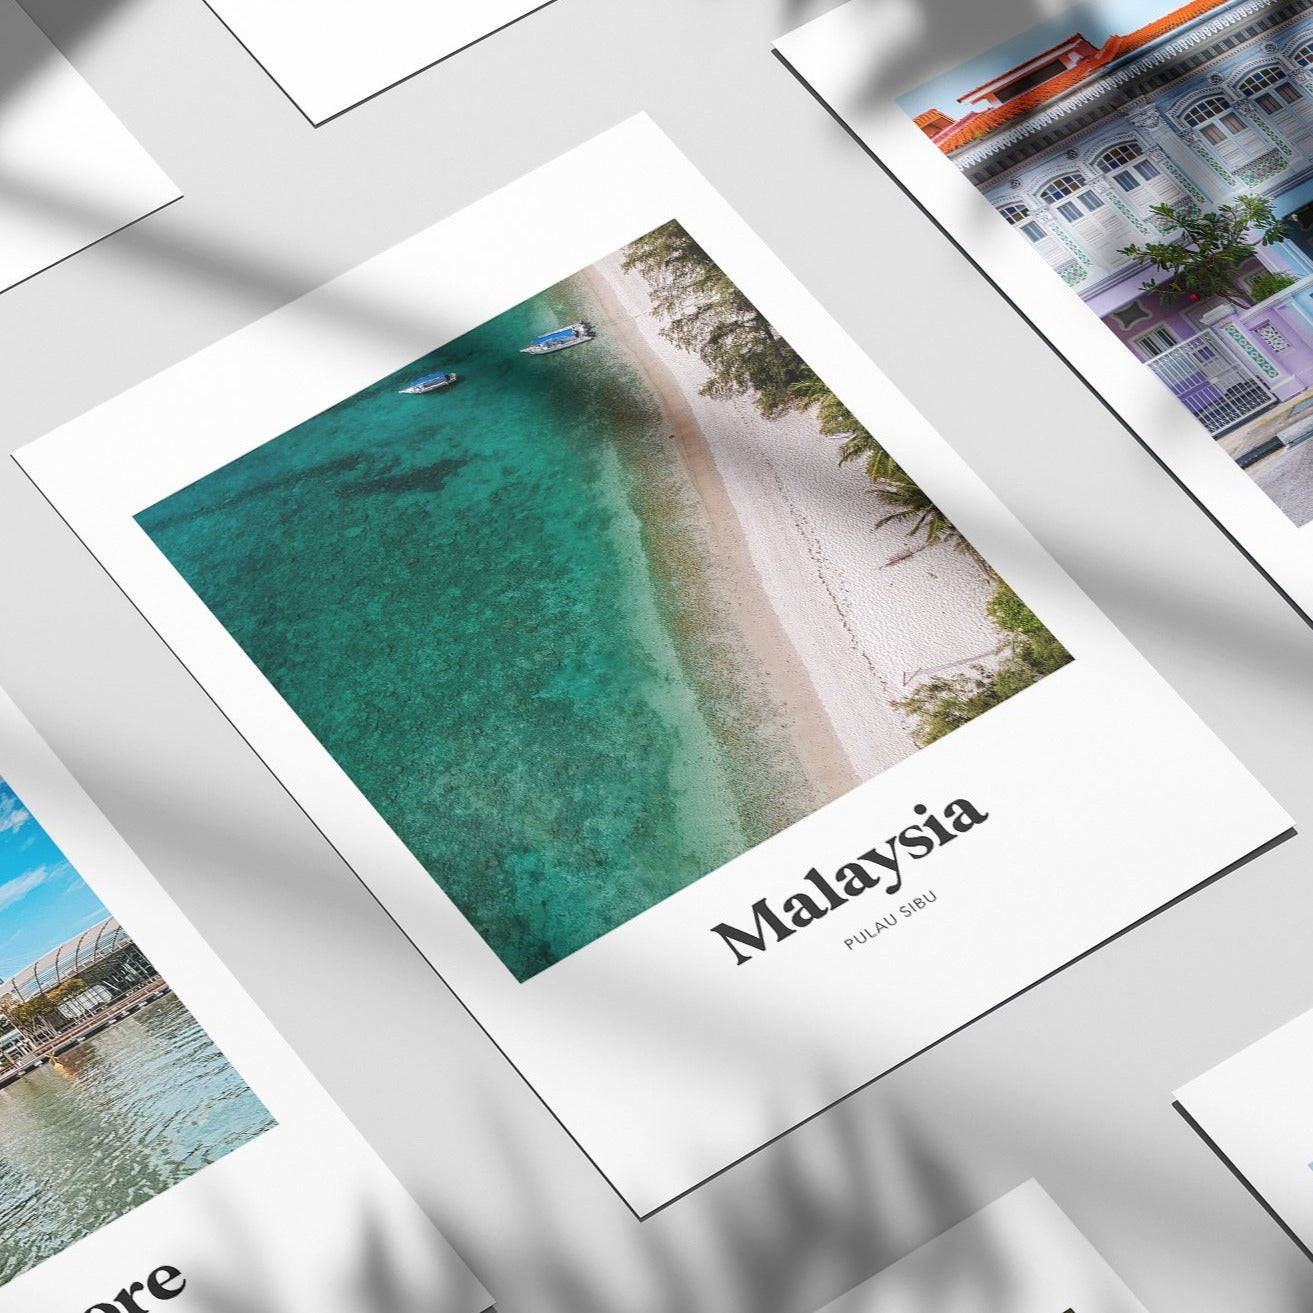 Malaysia - Pulau Sibu Beach Print